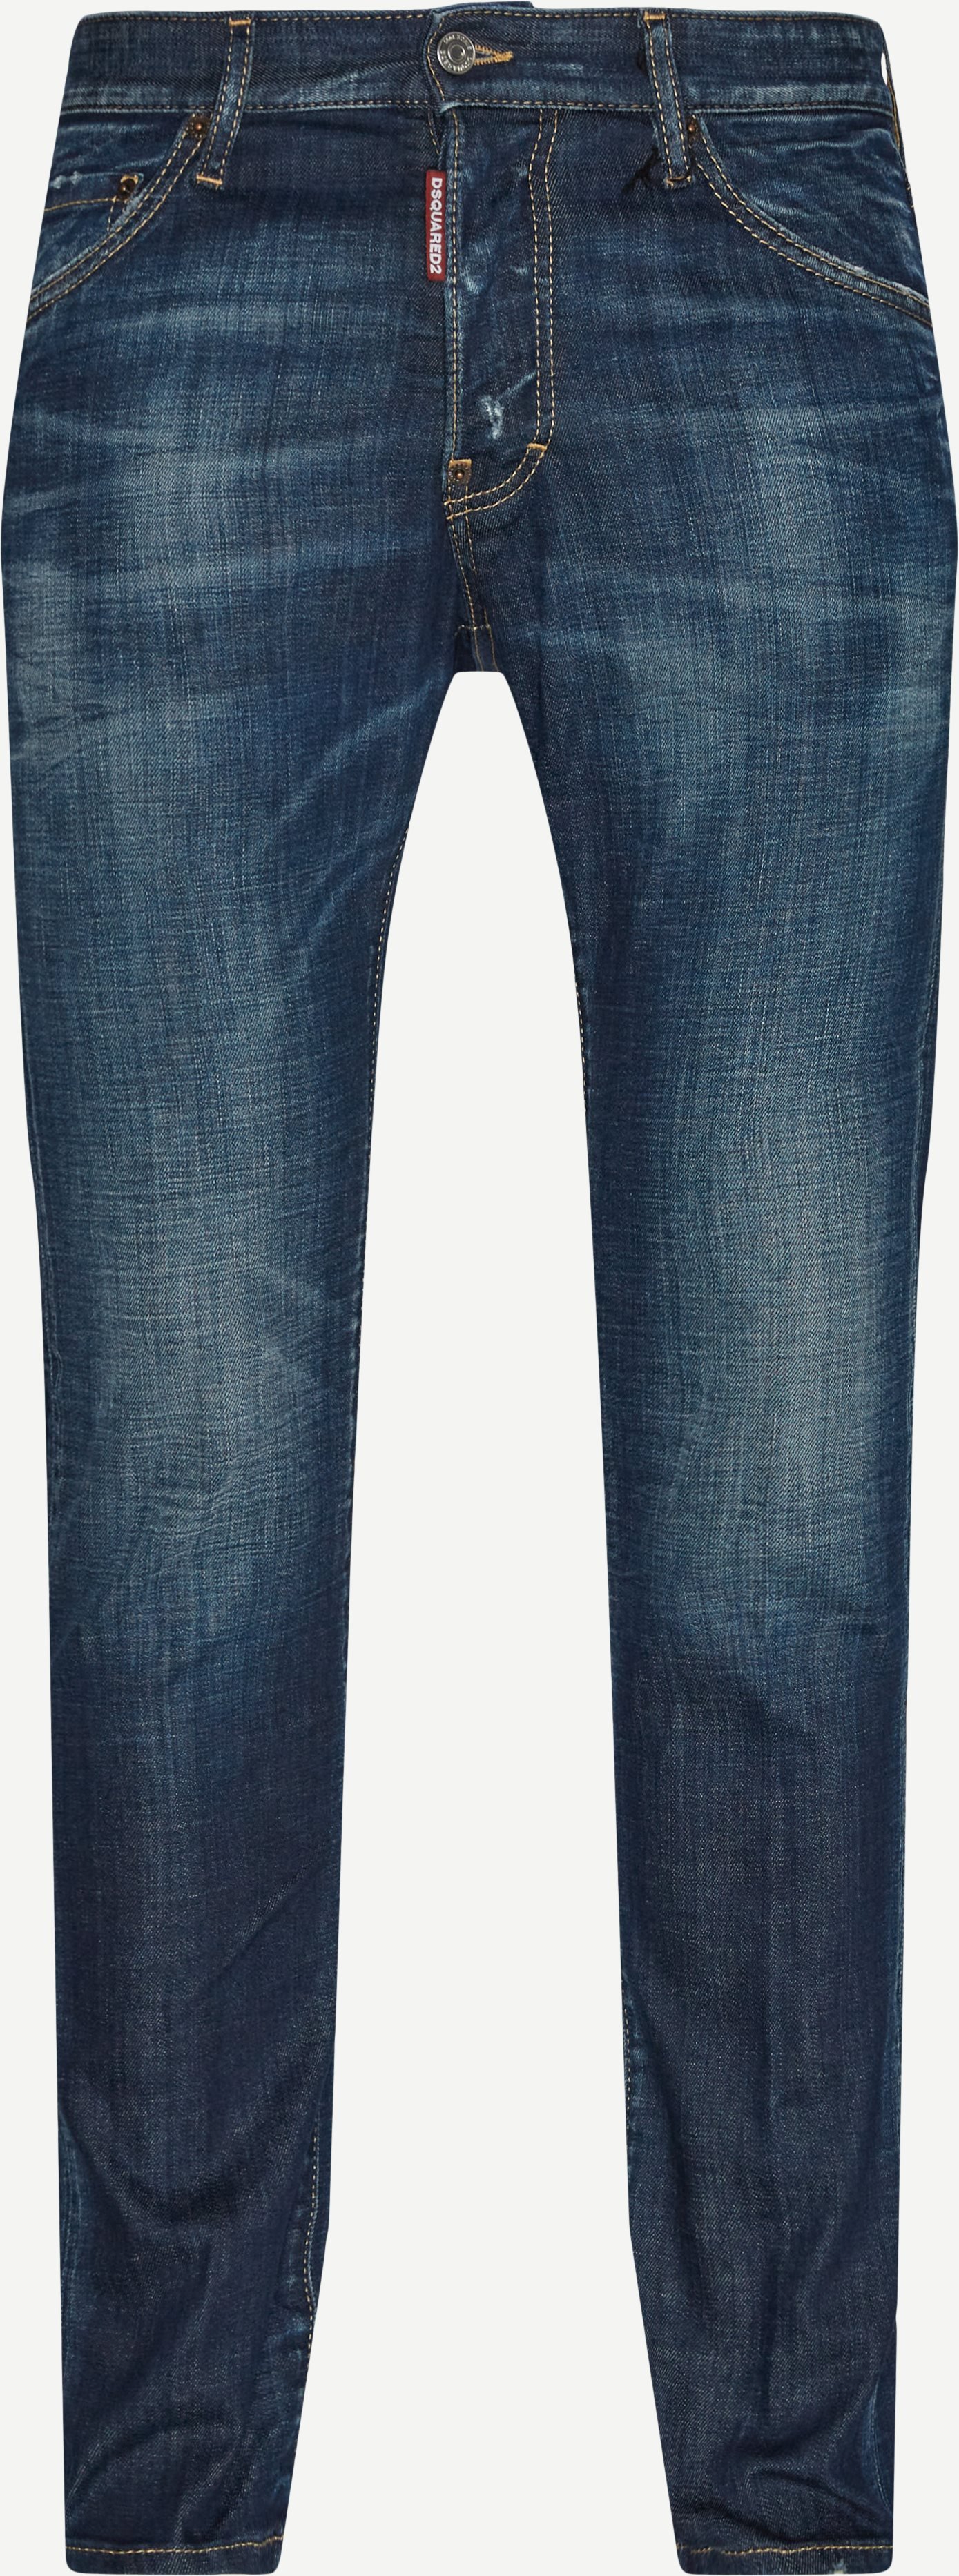 Coola Guy Jeans - Jeans - Slim fit - Denim